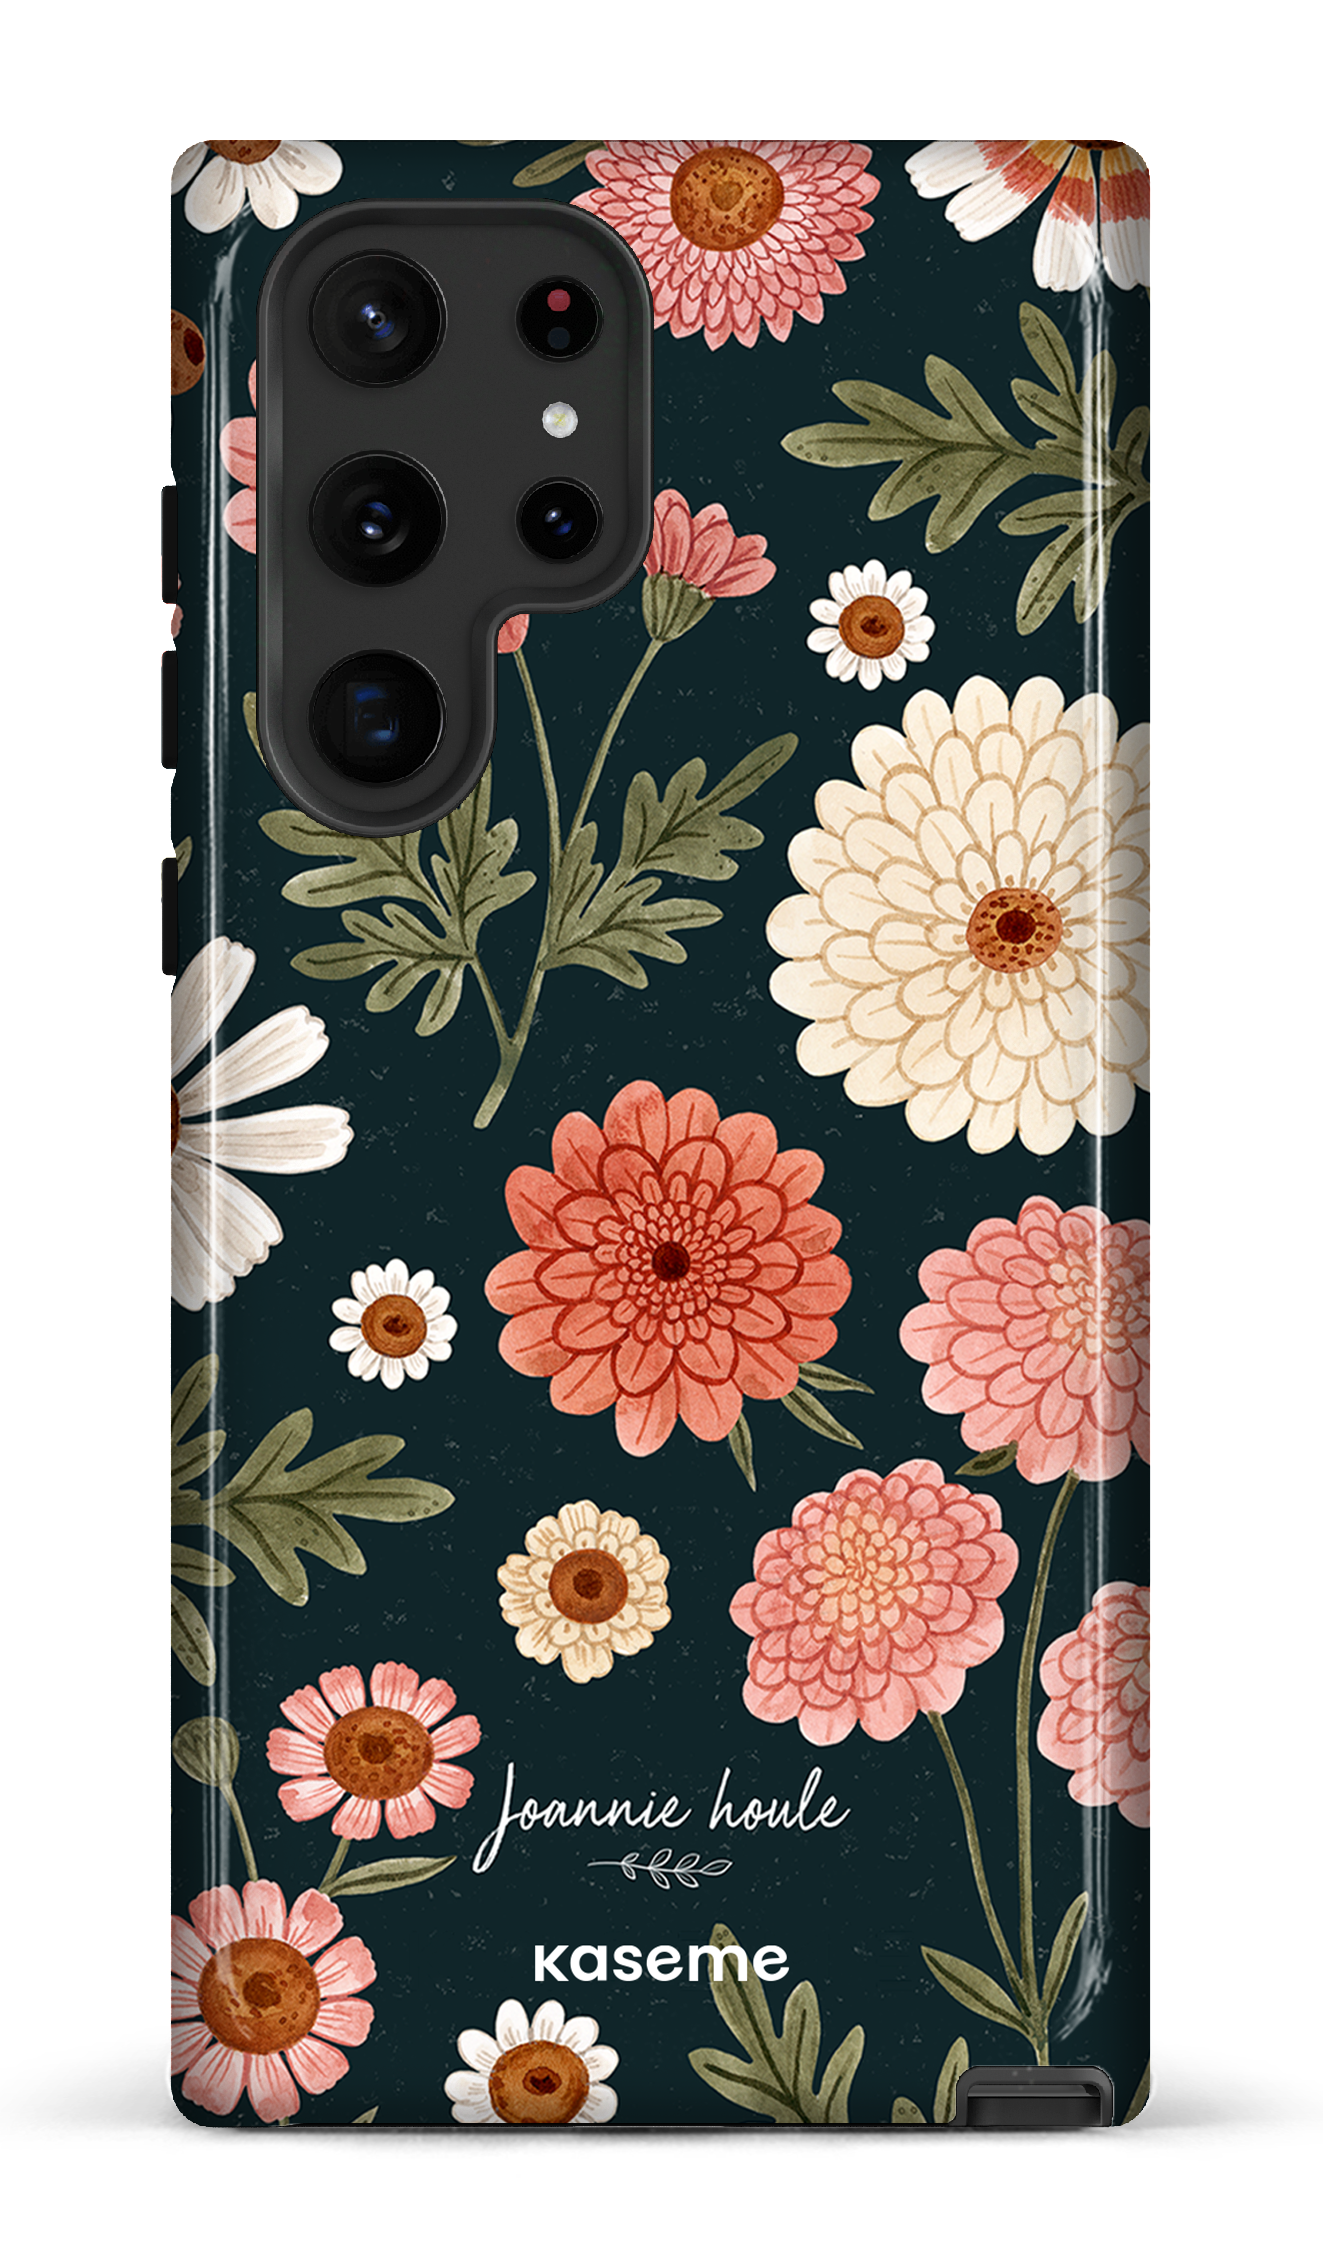 Chrysanthemums by Joannie Houle - Galaxy S22 Ultra